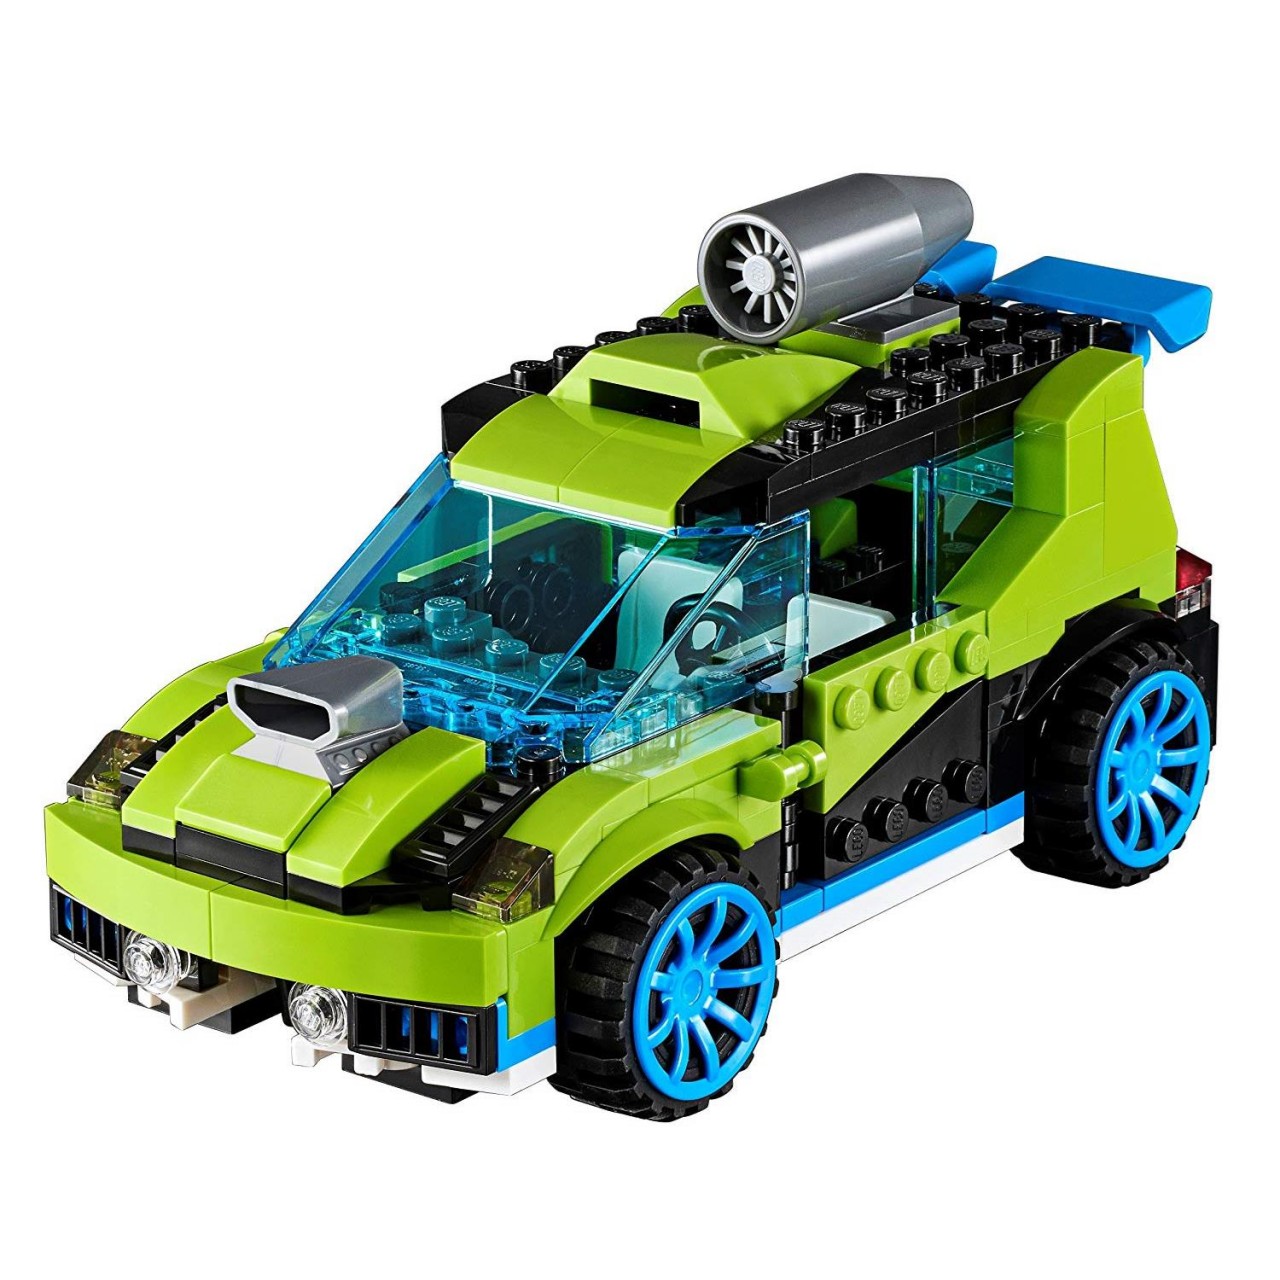 LEGO CREATOR 31074 Raketen-Rallyeflitzer